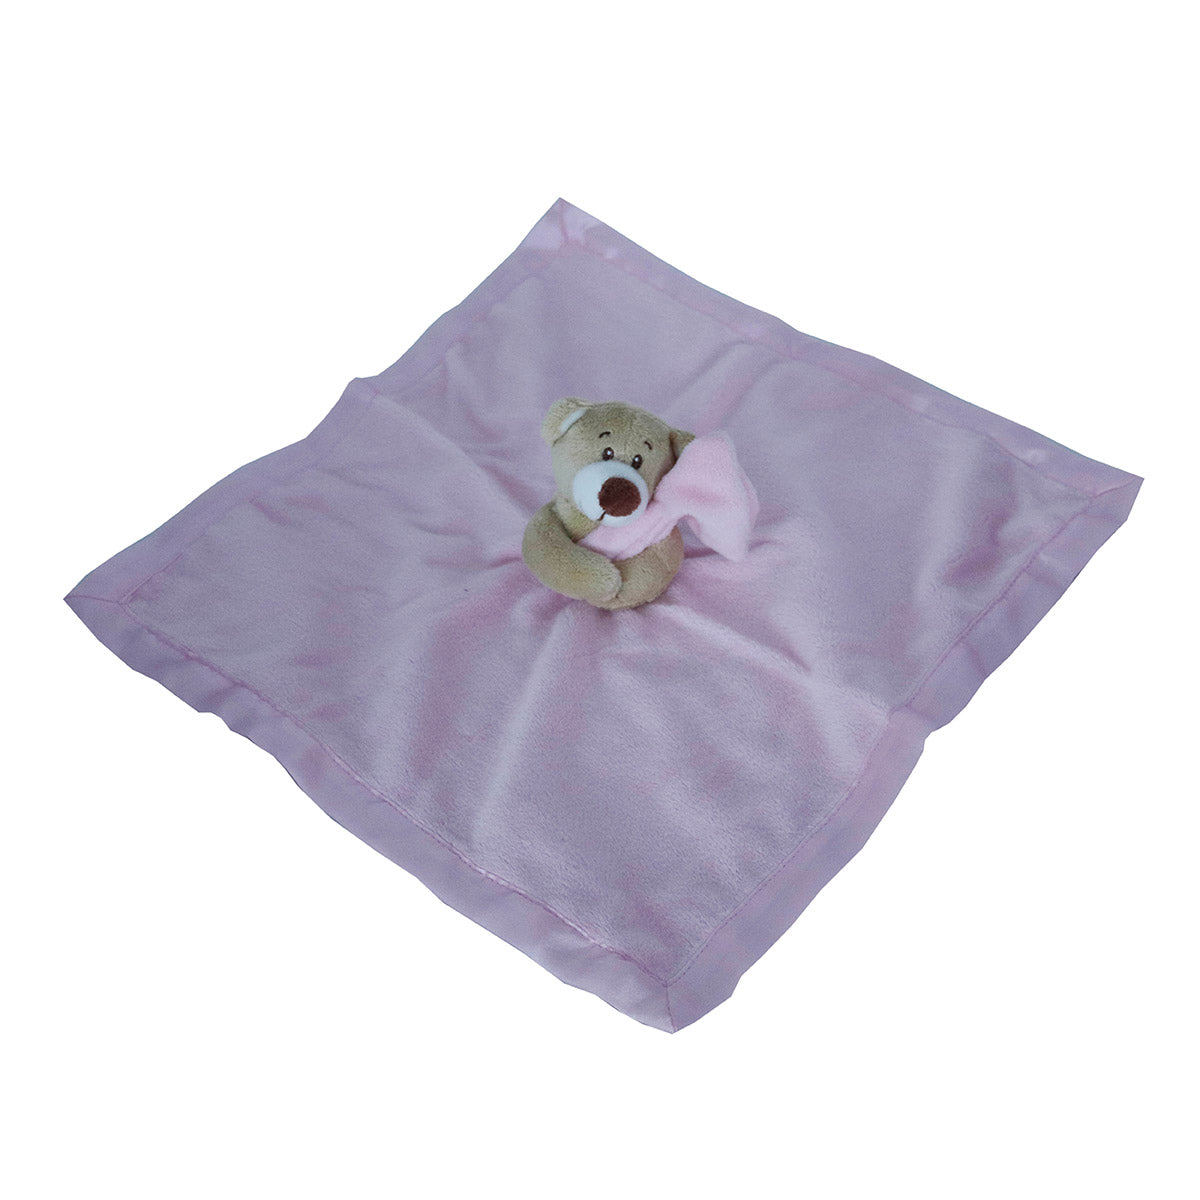 Snuggletime Cuddle Cub Security Blanket in Pink